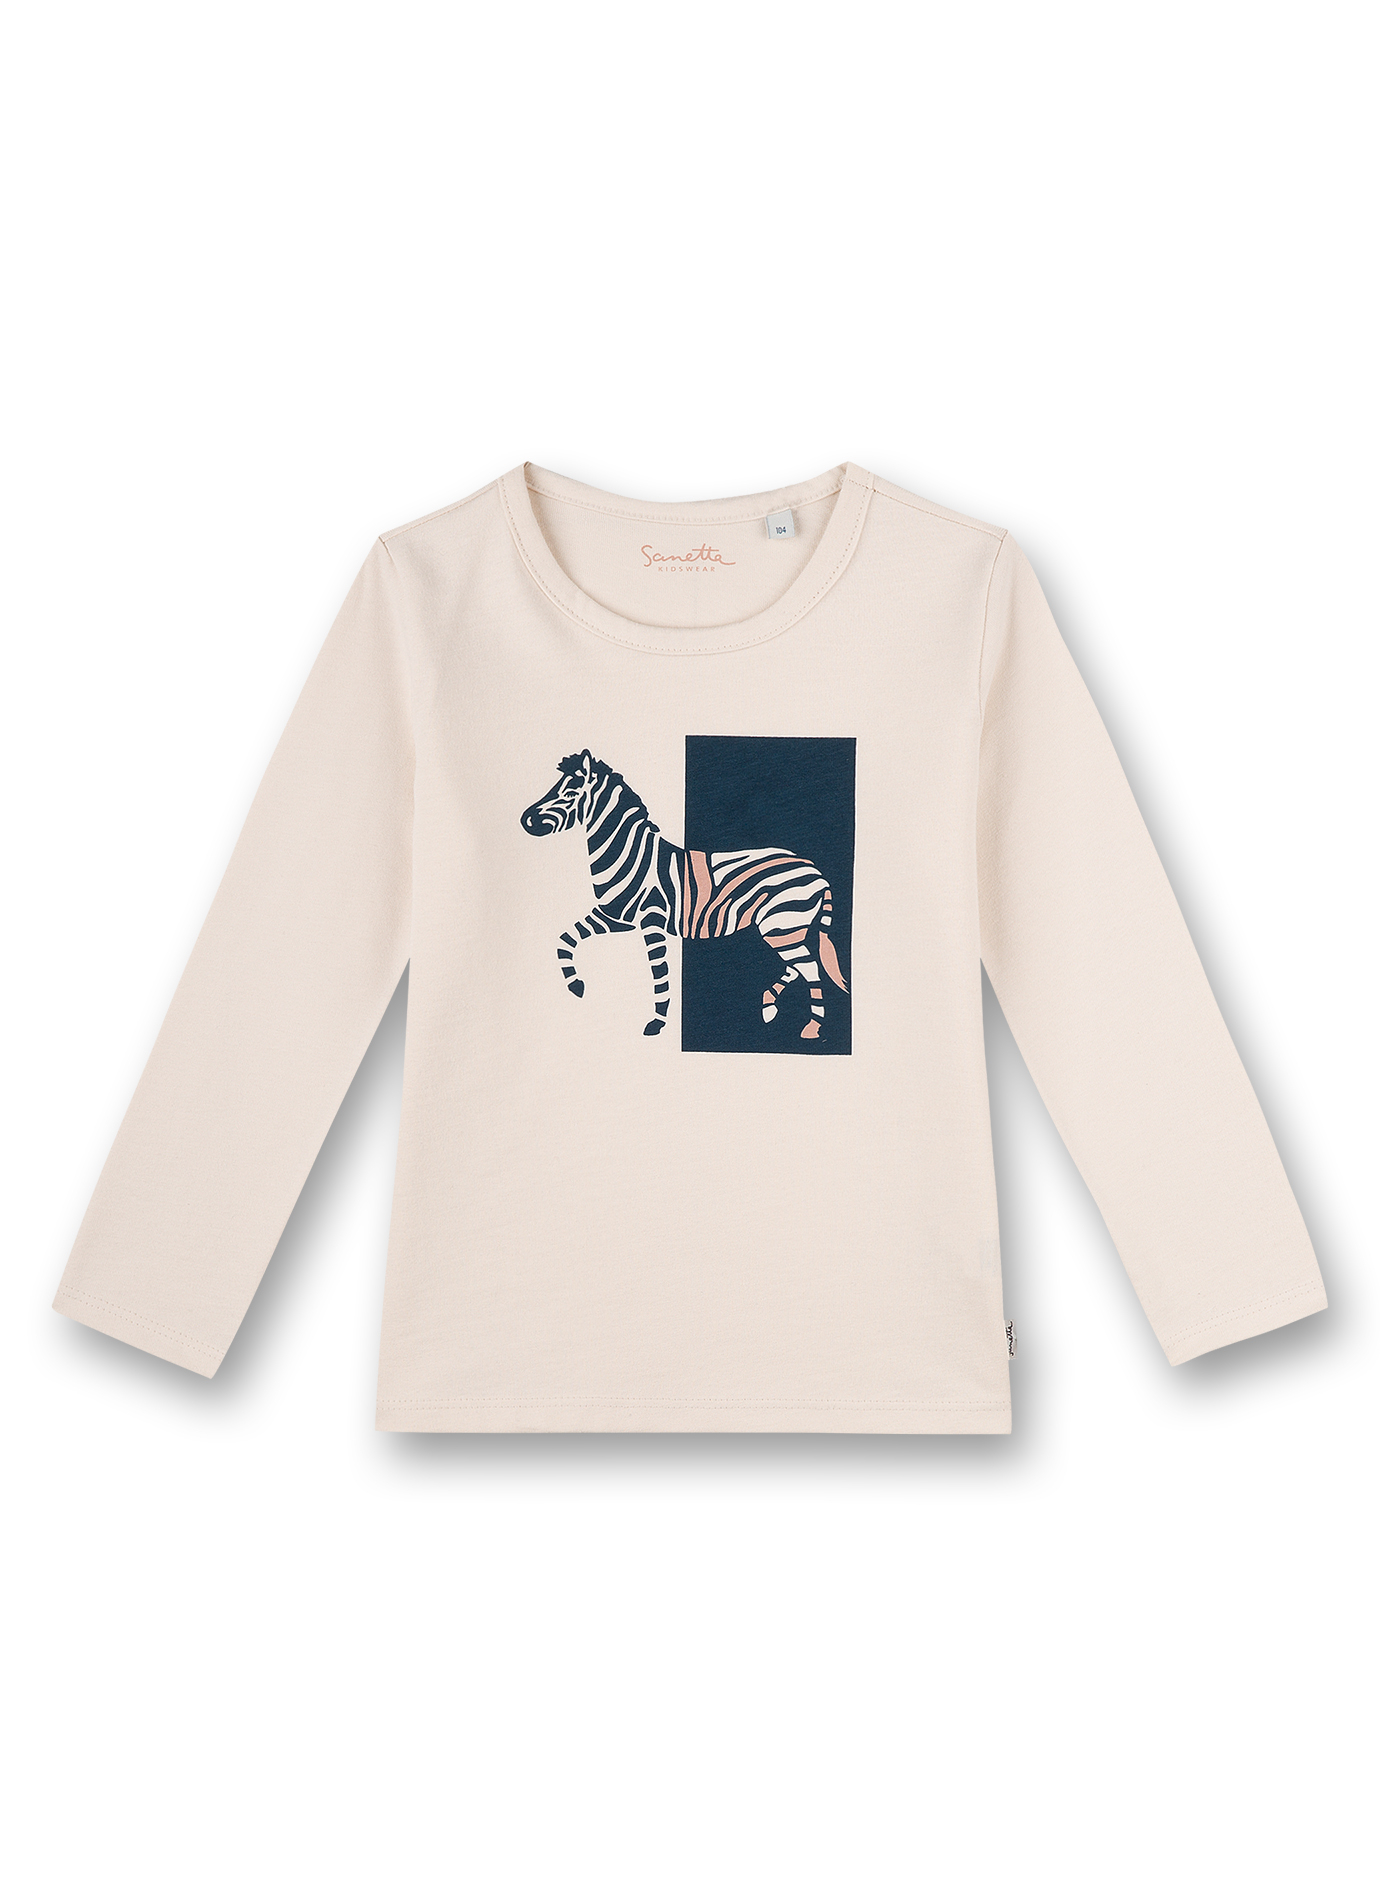 Mädchen-Shirt langarm Off-White Crazy Zebra